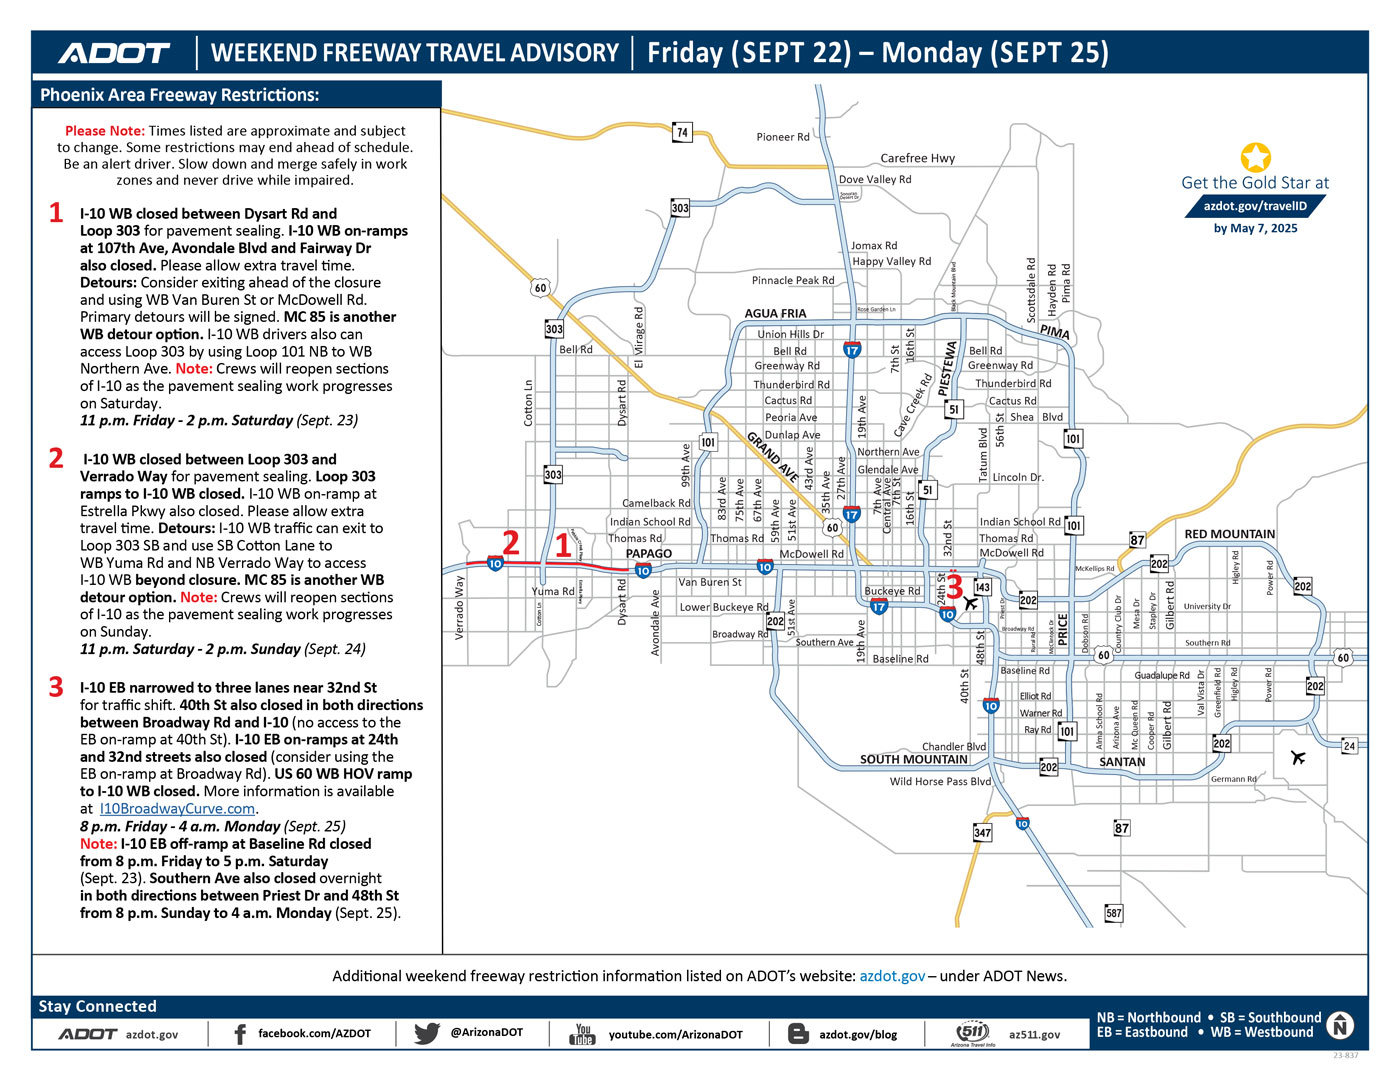 ADOT's Weekend Freeway Travel Advisory Map (Sept. 22-25, '23) - Phoenix Area